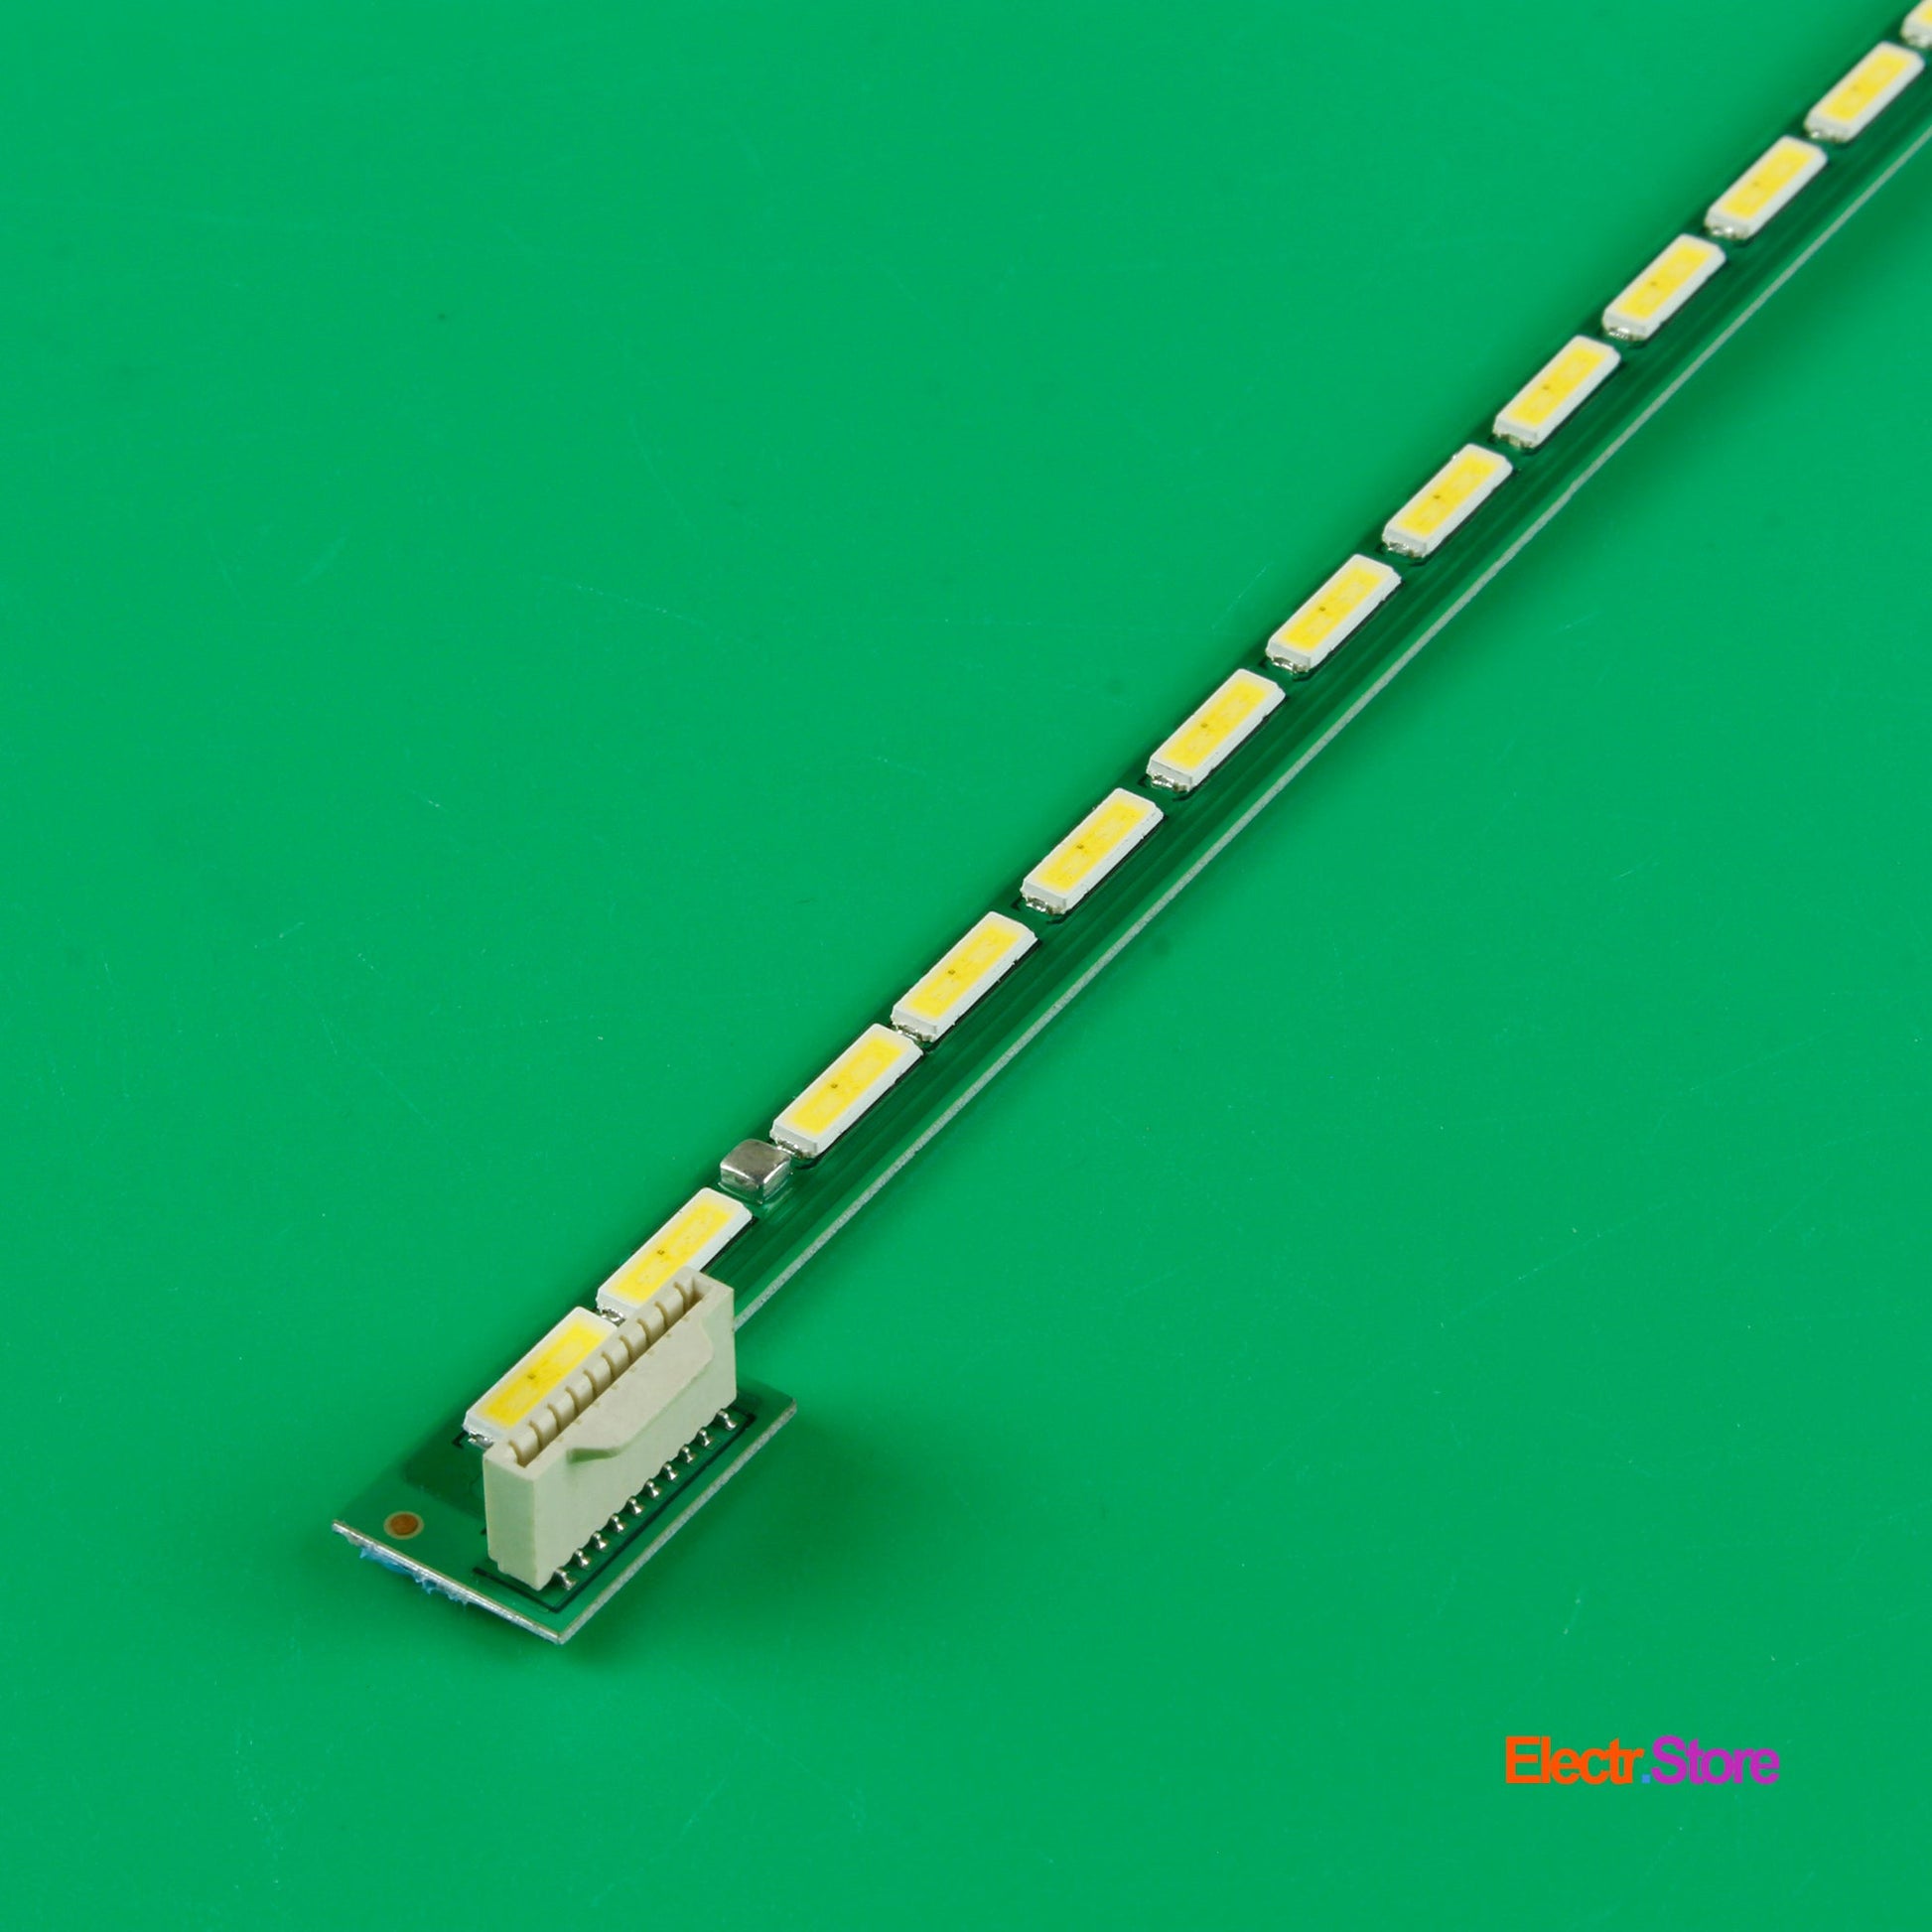 LED Backlight Strip Kits, 42" ART TV Rev0.6 1_L/R-Type, 6916L-0952A, 2X54LED (2 pcs/kit), for TV 42" LG: 42LA691, 42LA660S, 42LA6608 42" 42" ART 6916L0952A 6920L-0001C LED Backlights LG PHILIPS Electr.Store